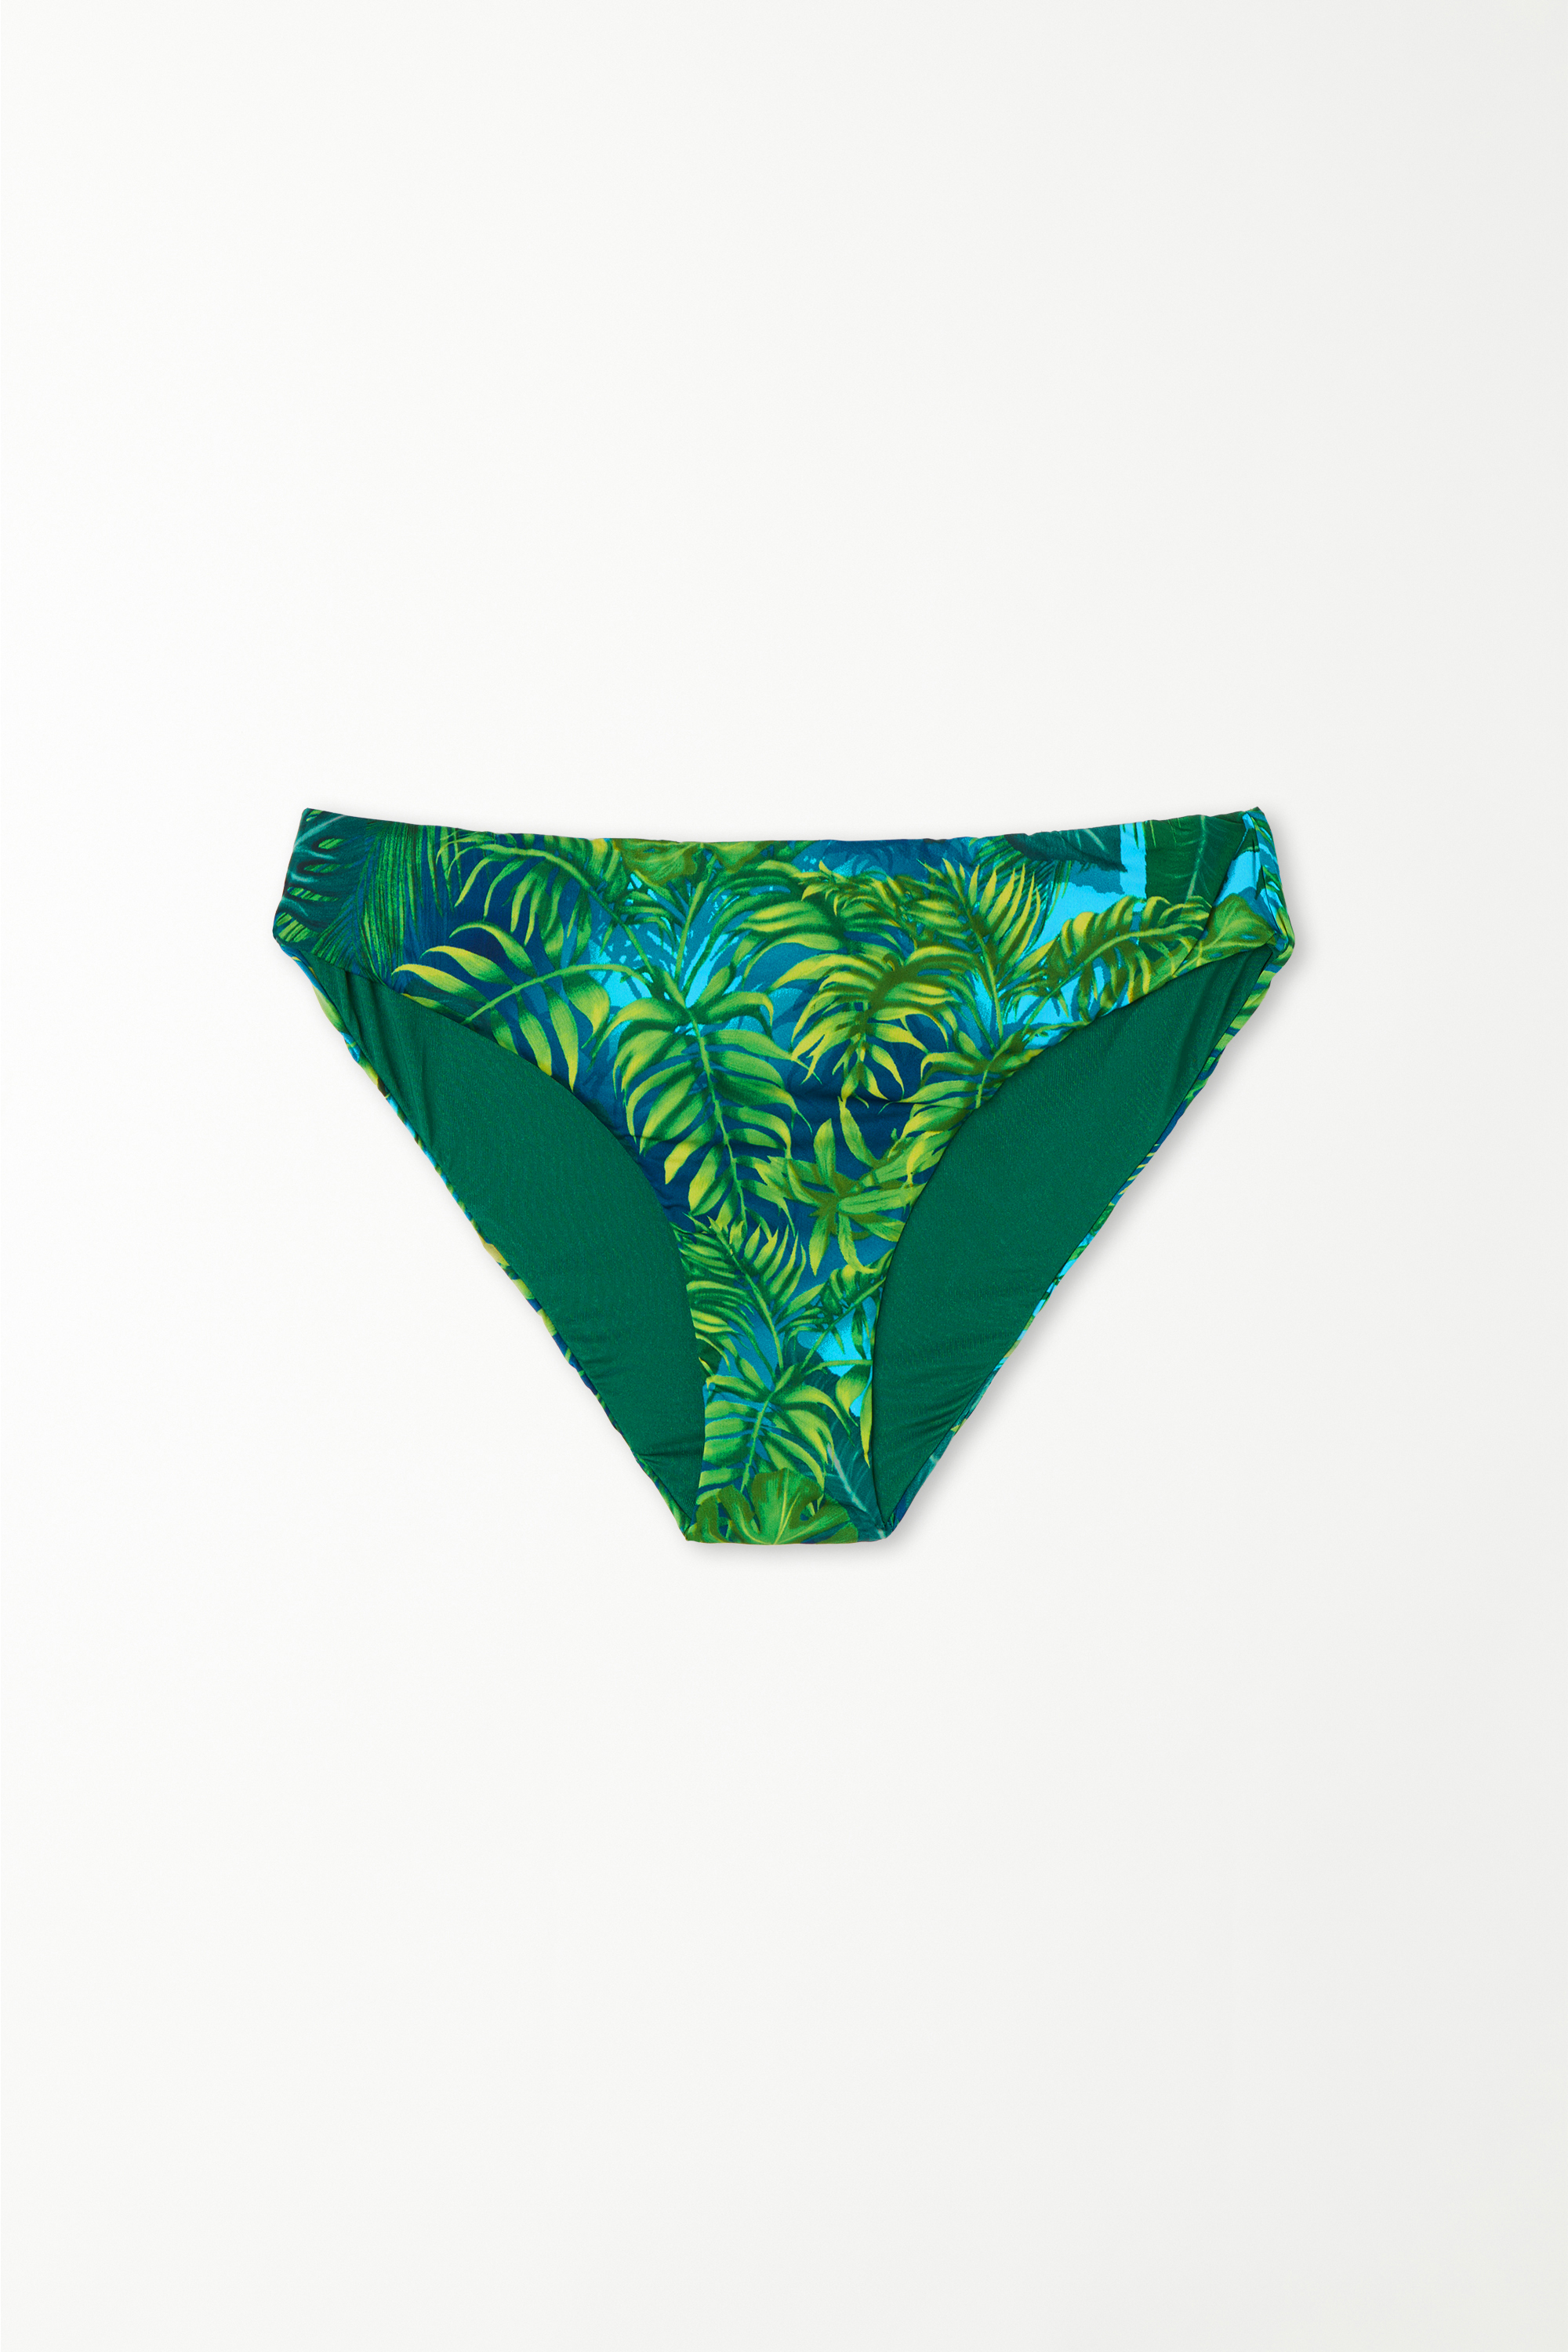 Emerald Jungle Classic Bikini Bottoms